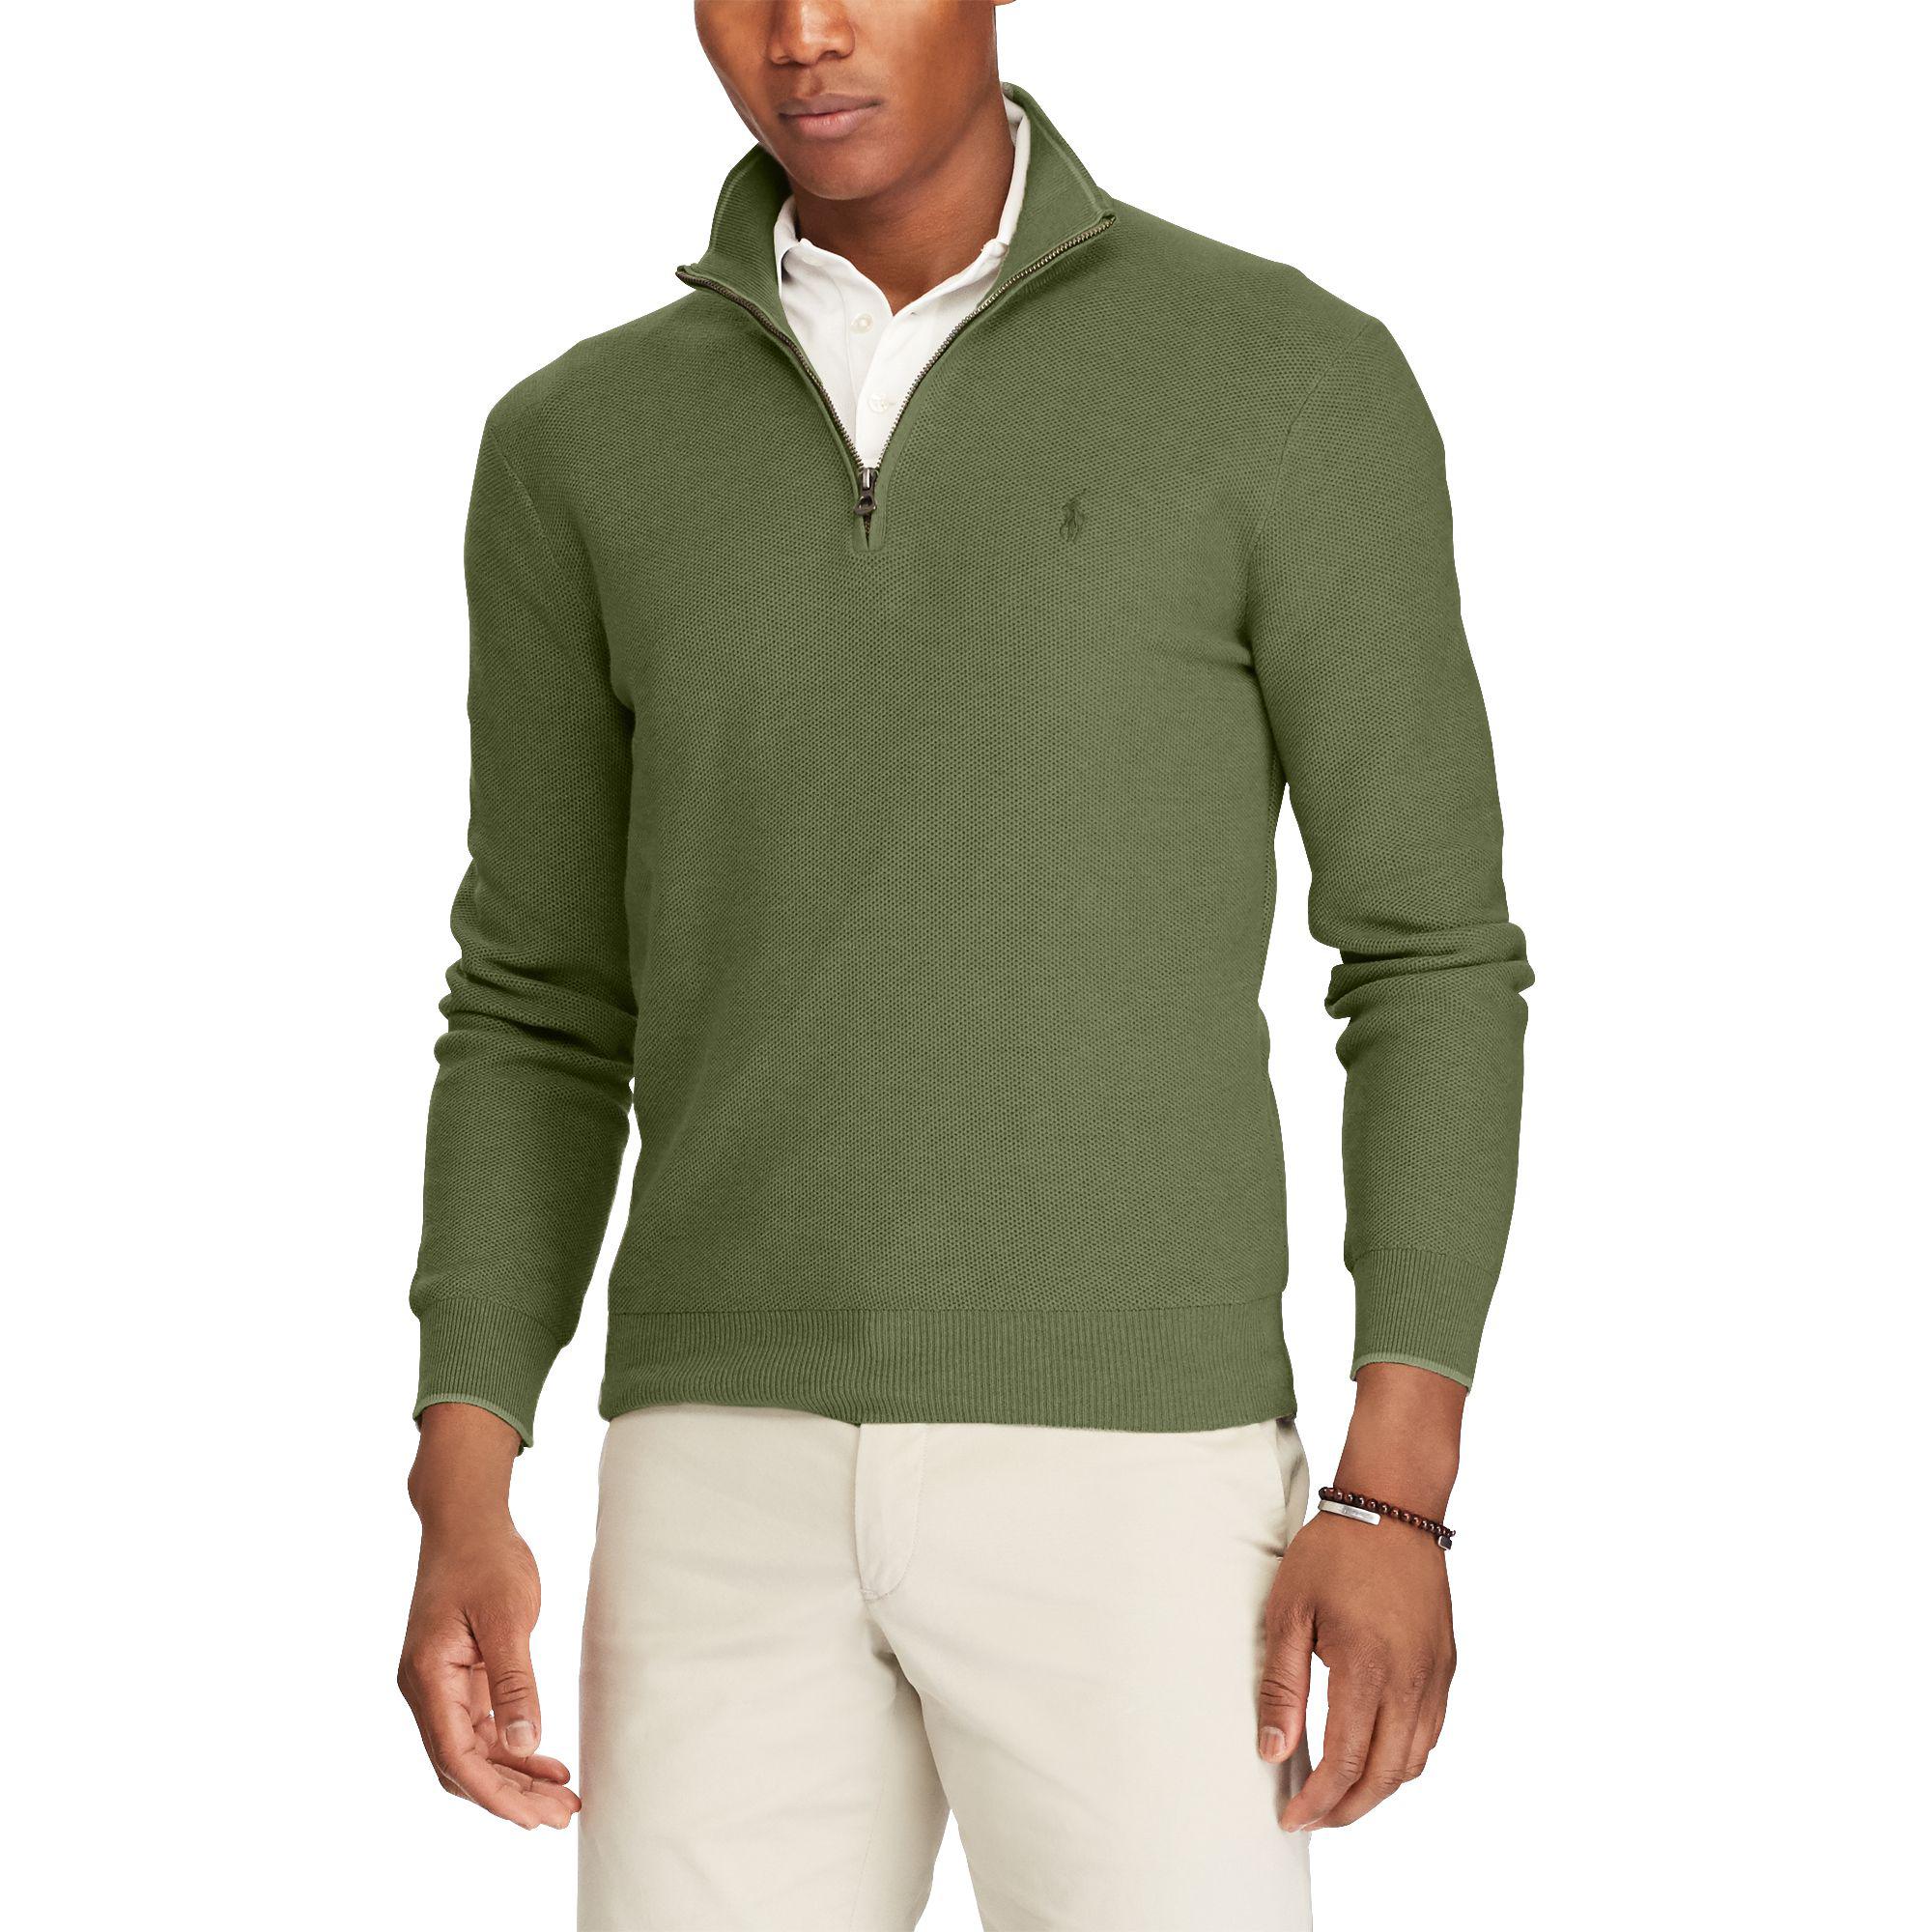 Polo Ralph Lauren Cotton Mesh Half-zip Sweater in Sage Green Heather (Green)  for Men - Lyst